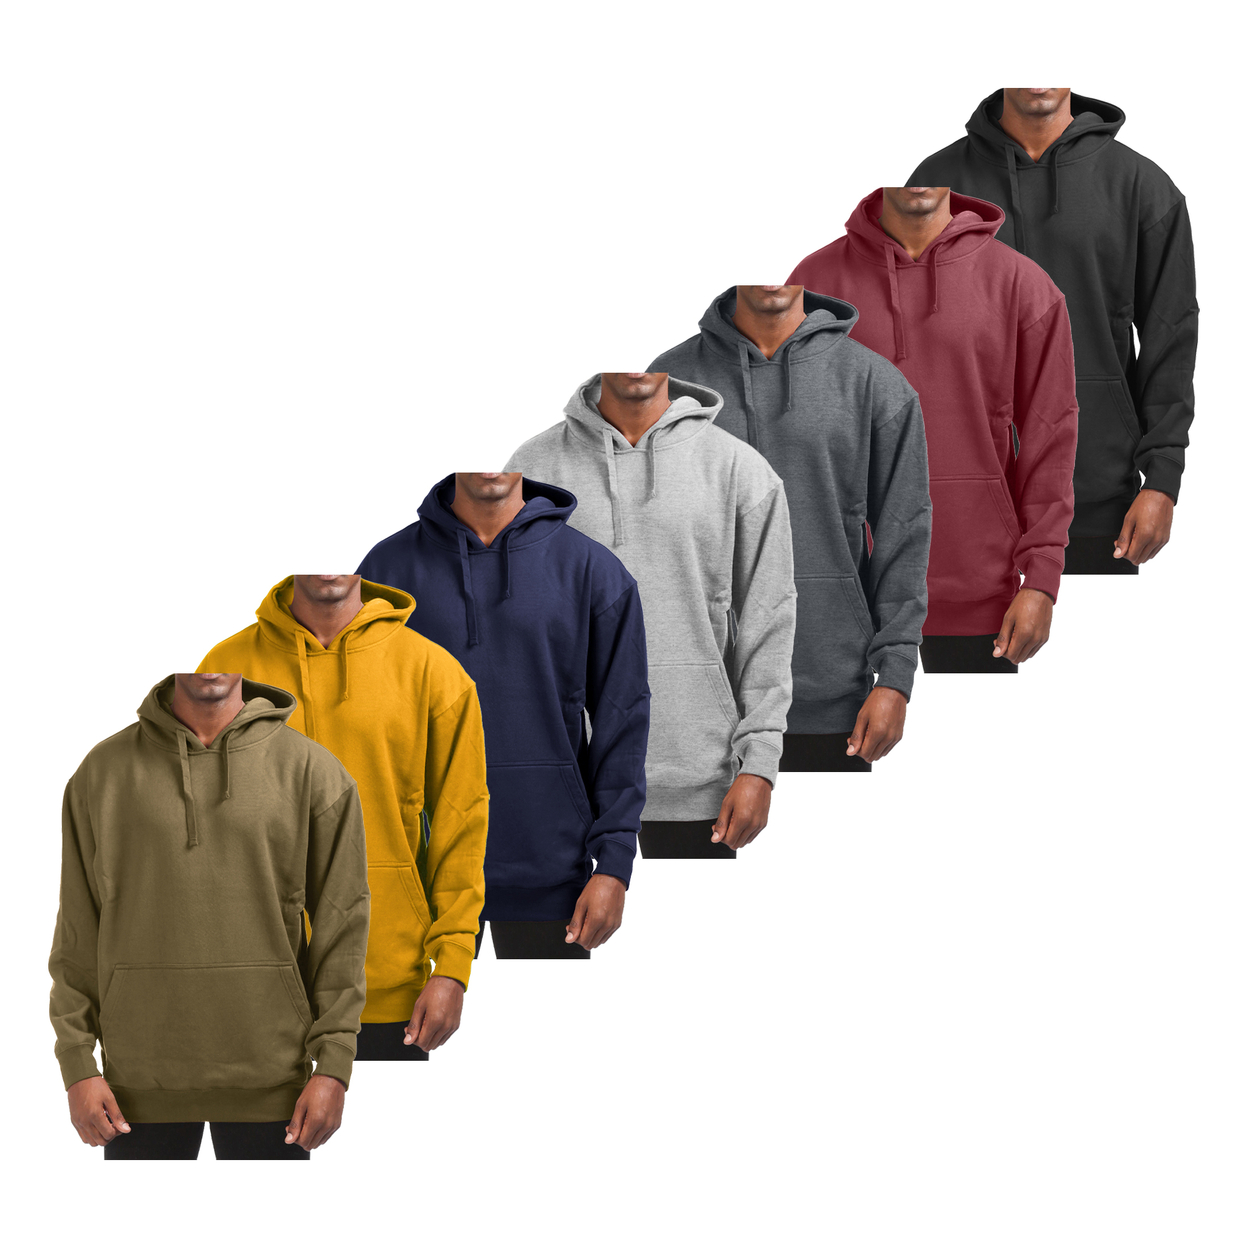 2-Pack: Men's Super-Soft Winter Warm Cotton-Blend Fleece Pullover Hoodie With Kangaroo Pocket - Black & Red, Large